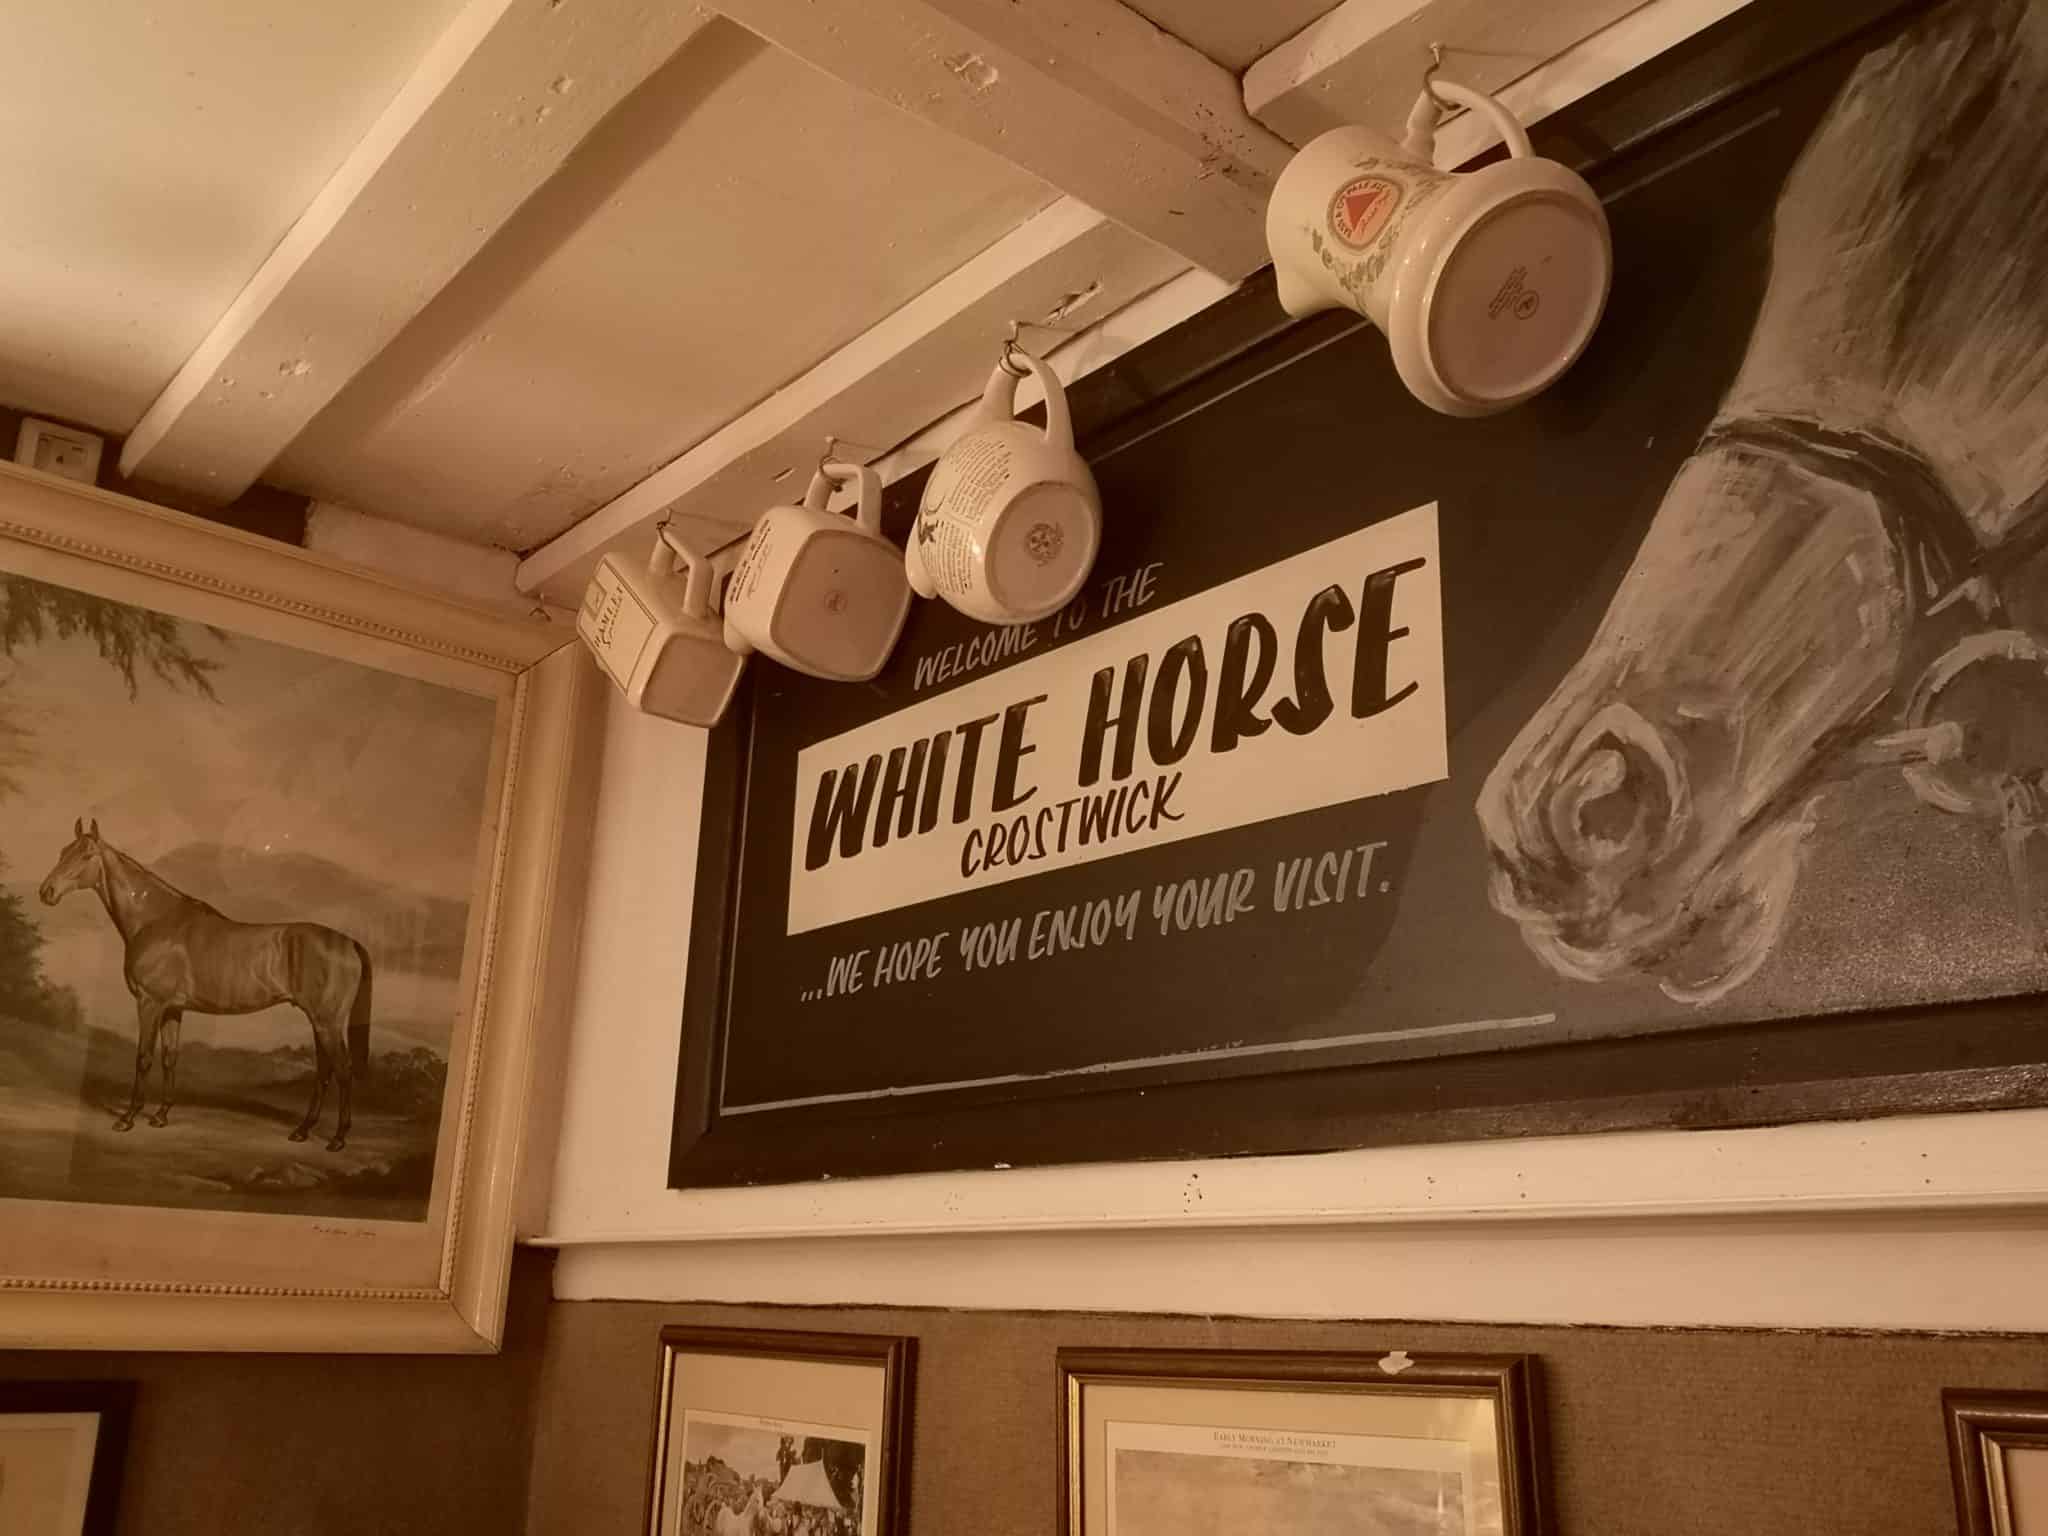 The White Horse, Crostwick